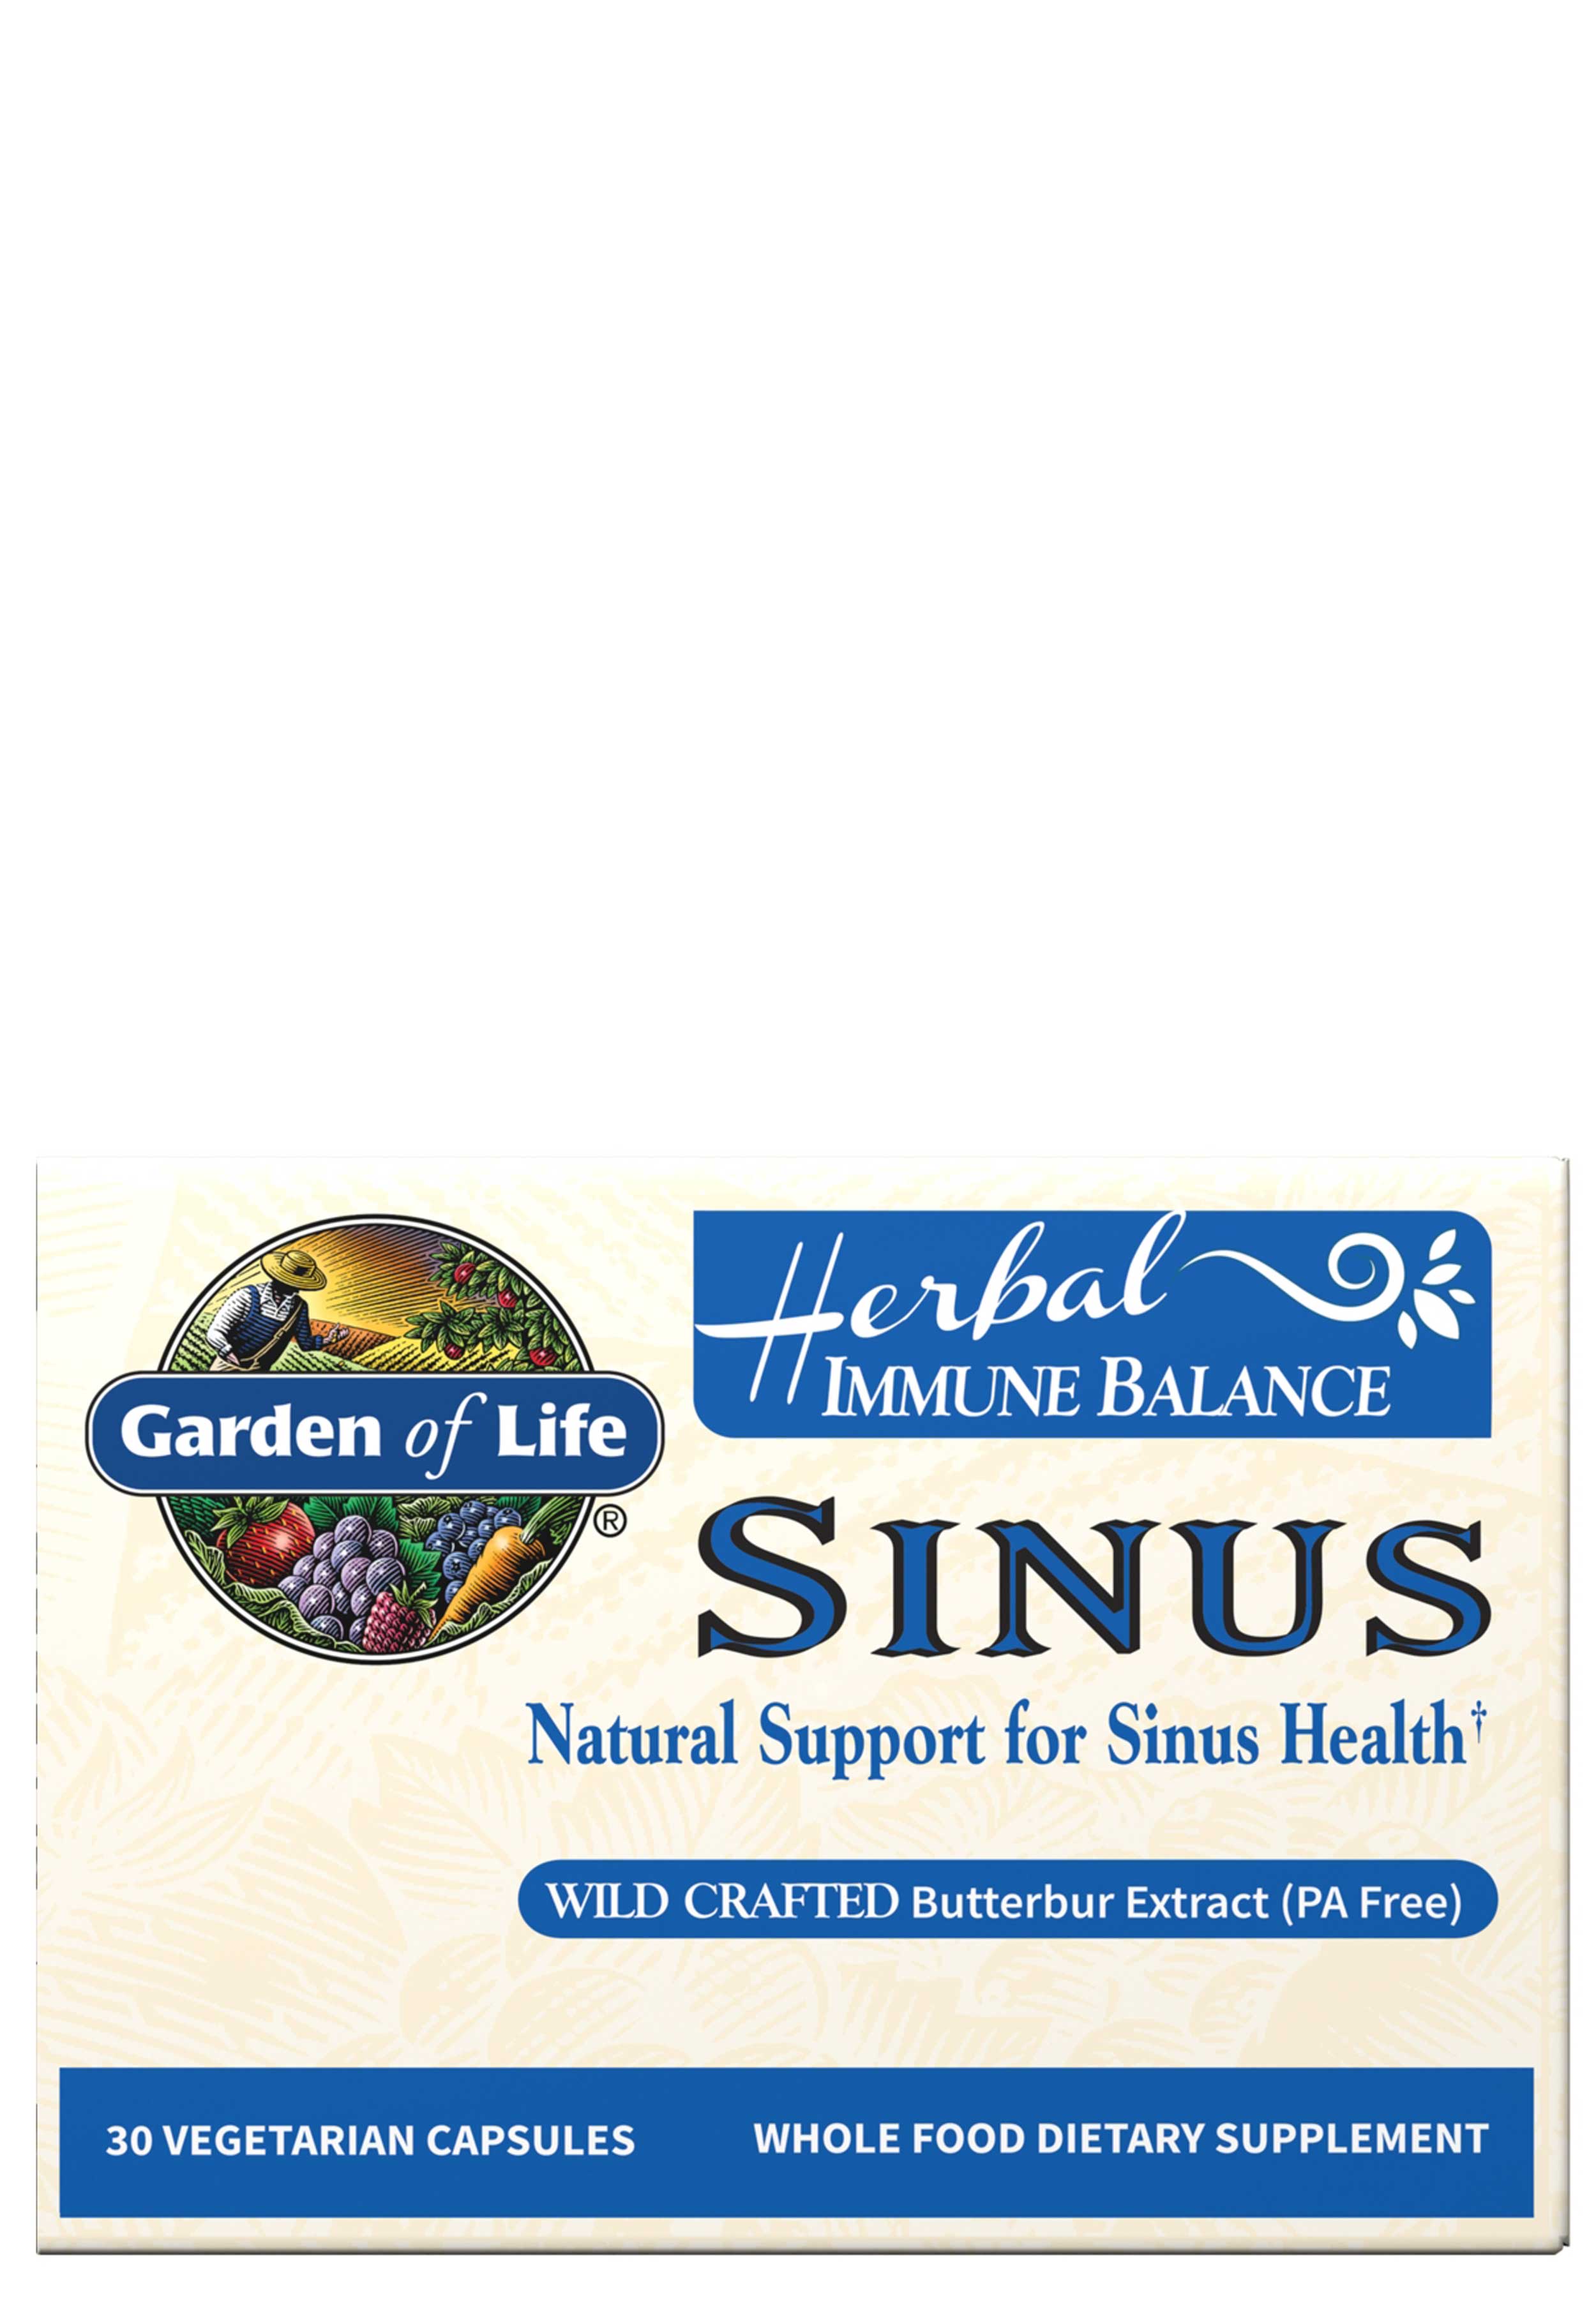 Garden of Life Immune Balance Sinus